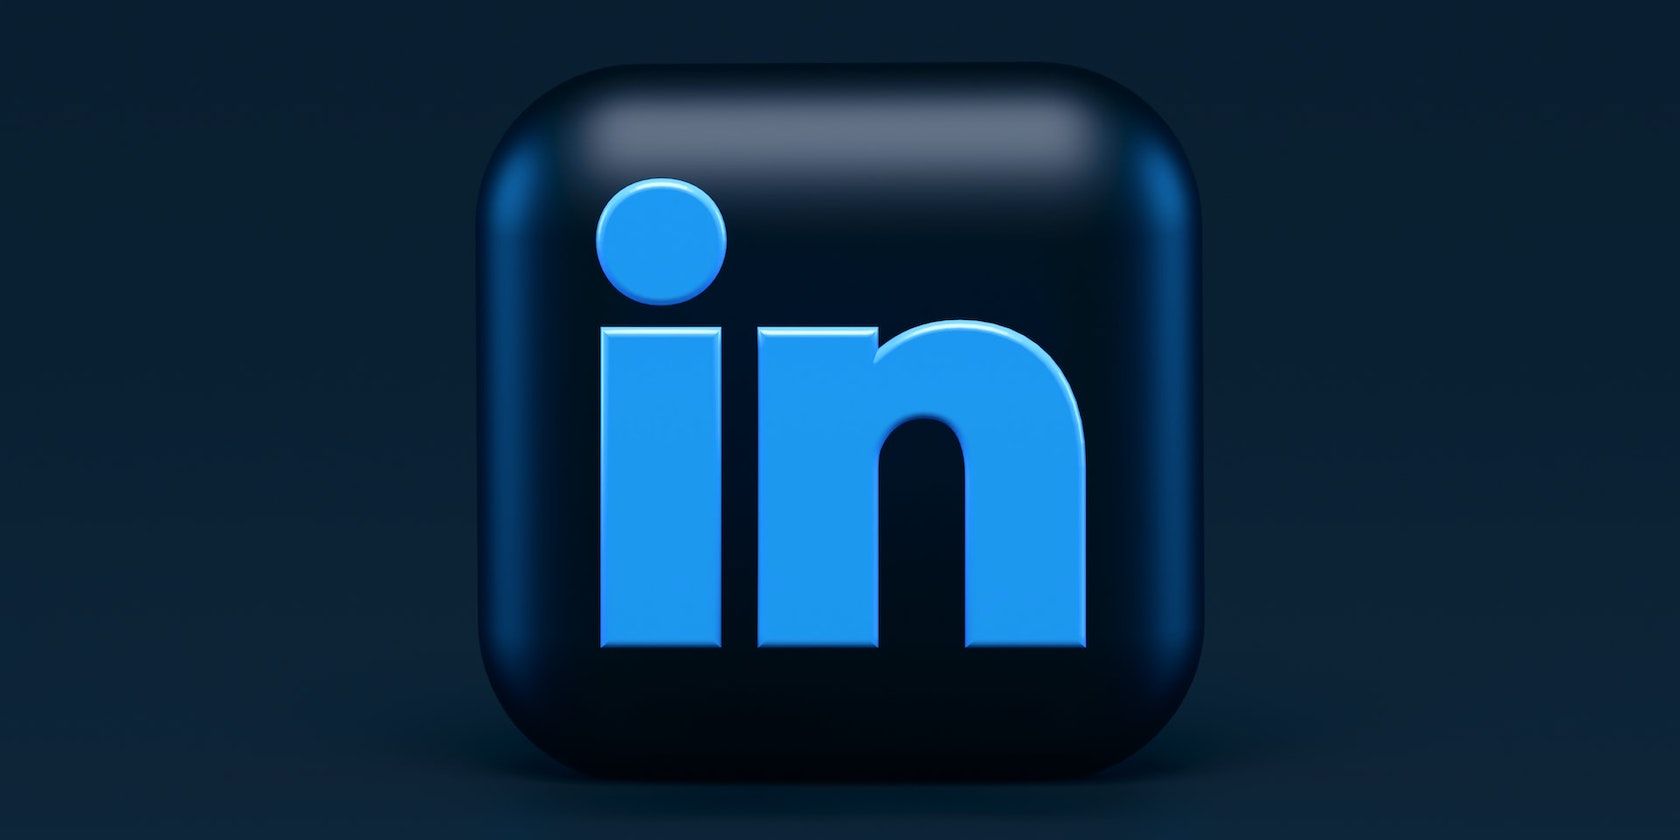 The LinkedIn app logo on a dark blue background